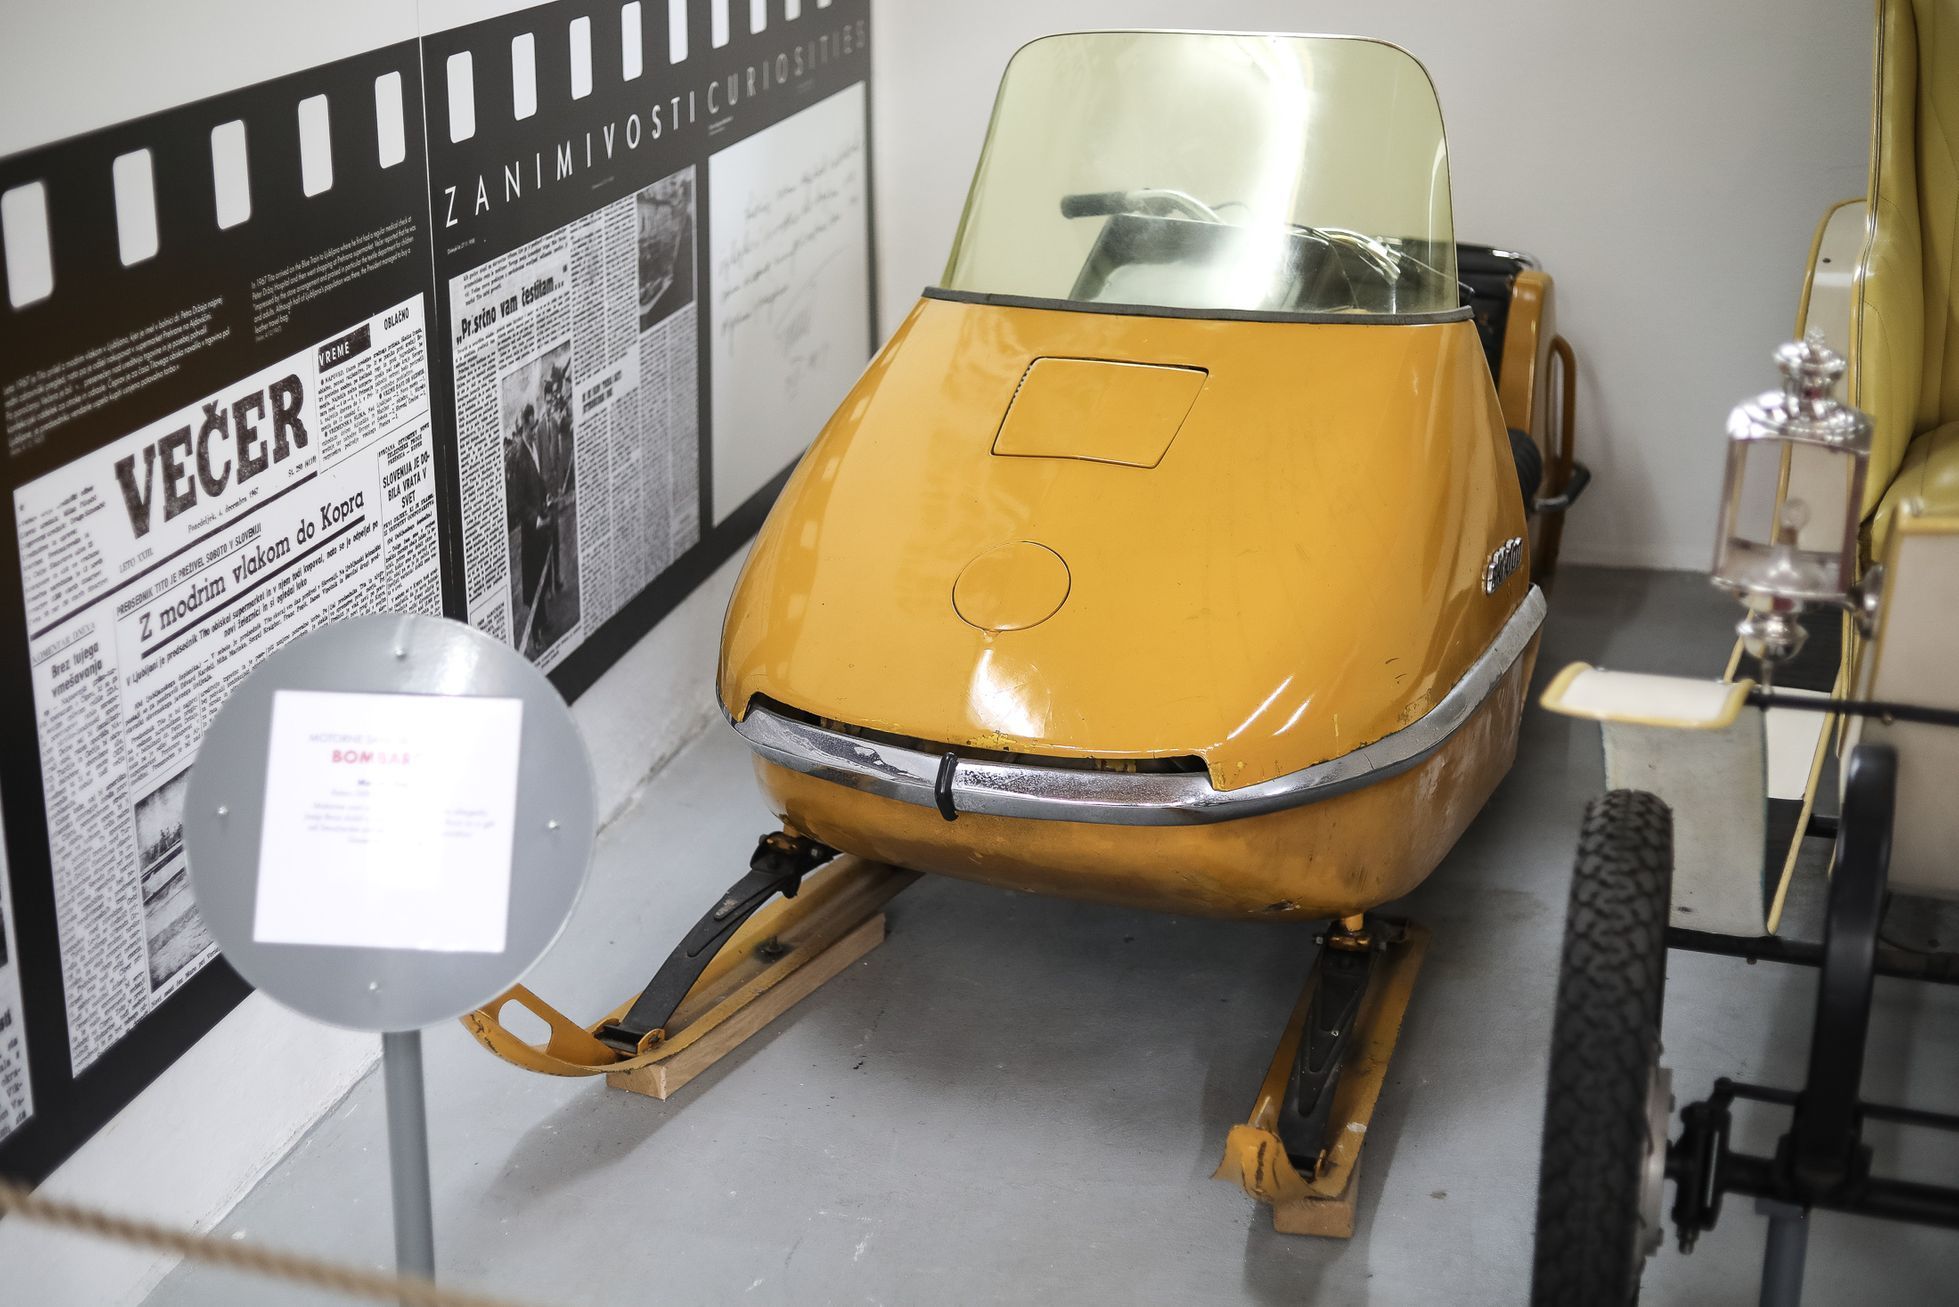 Slovinsko, muzeum aut Josipa Broze Tita